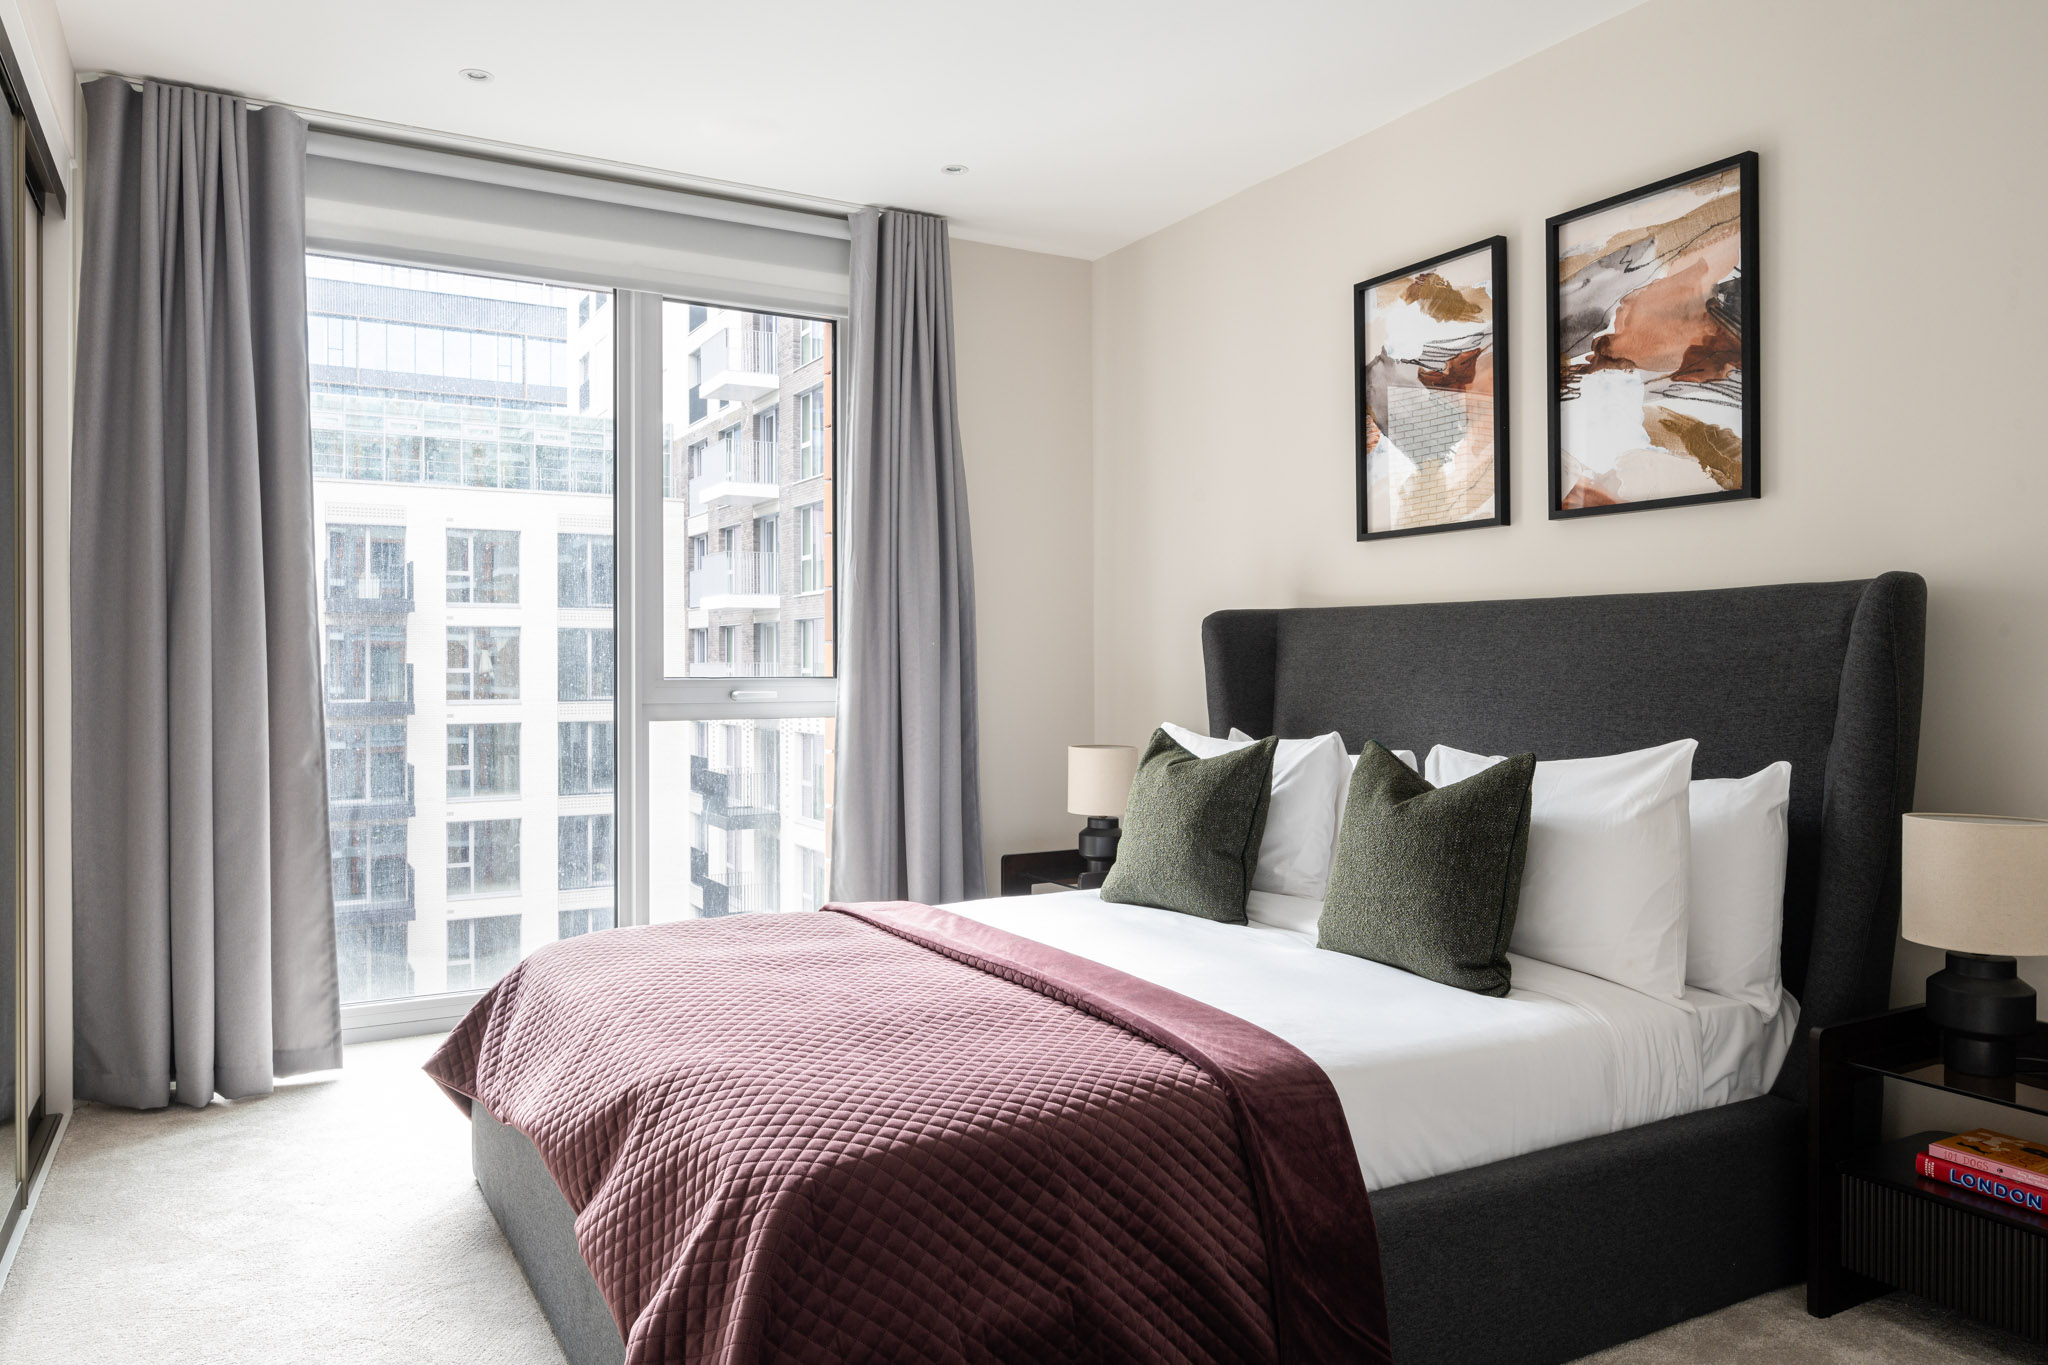 Bedroom - Two Bedroom Apartment - Urban rest Battersea Apartments - London - Urban Rest